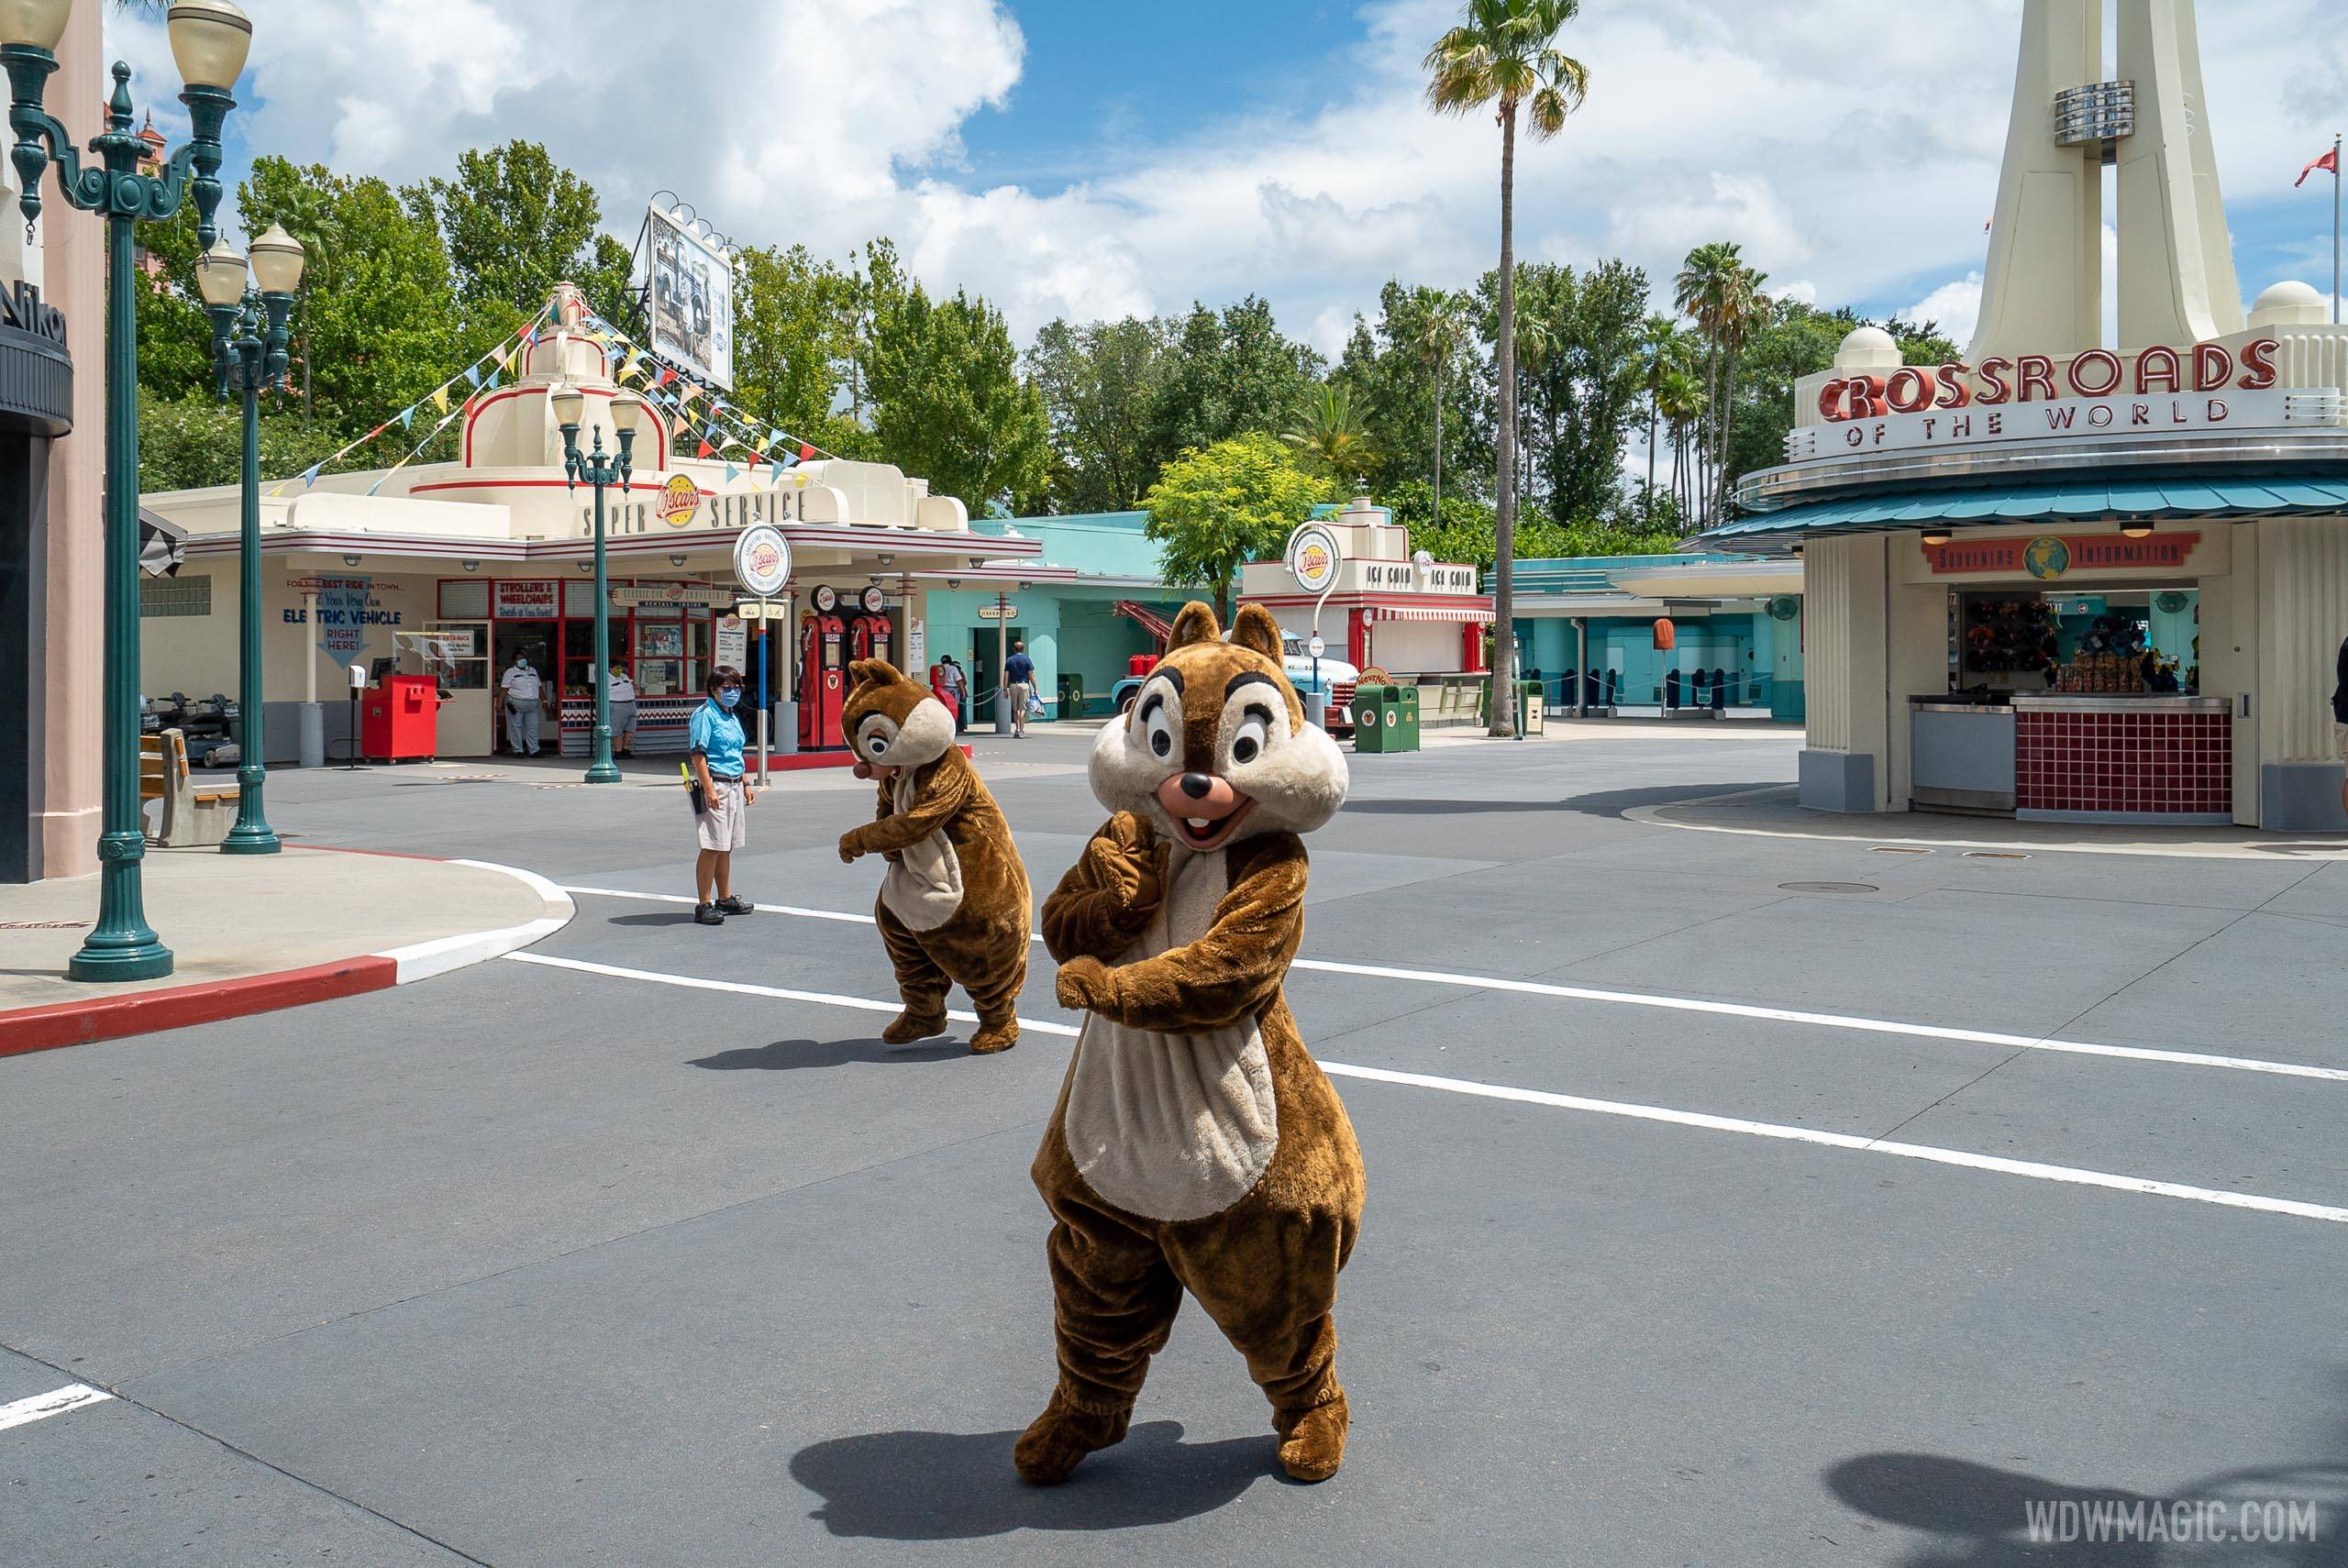 Disney's Hollywood Studios reopening from COVID-19 shutdown